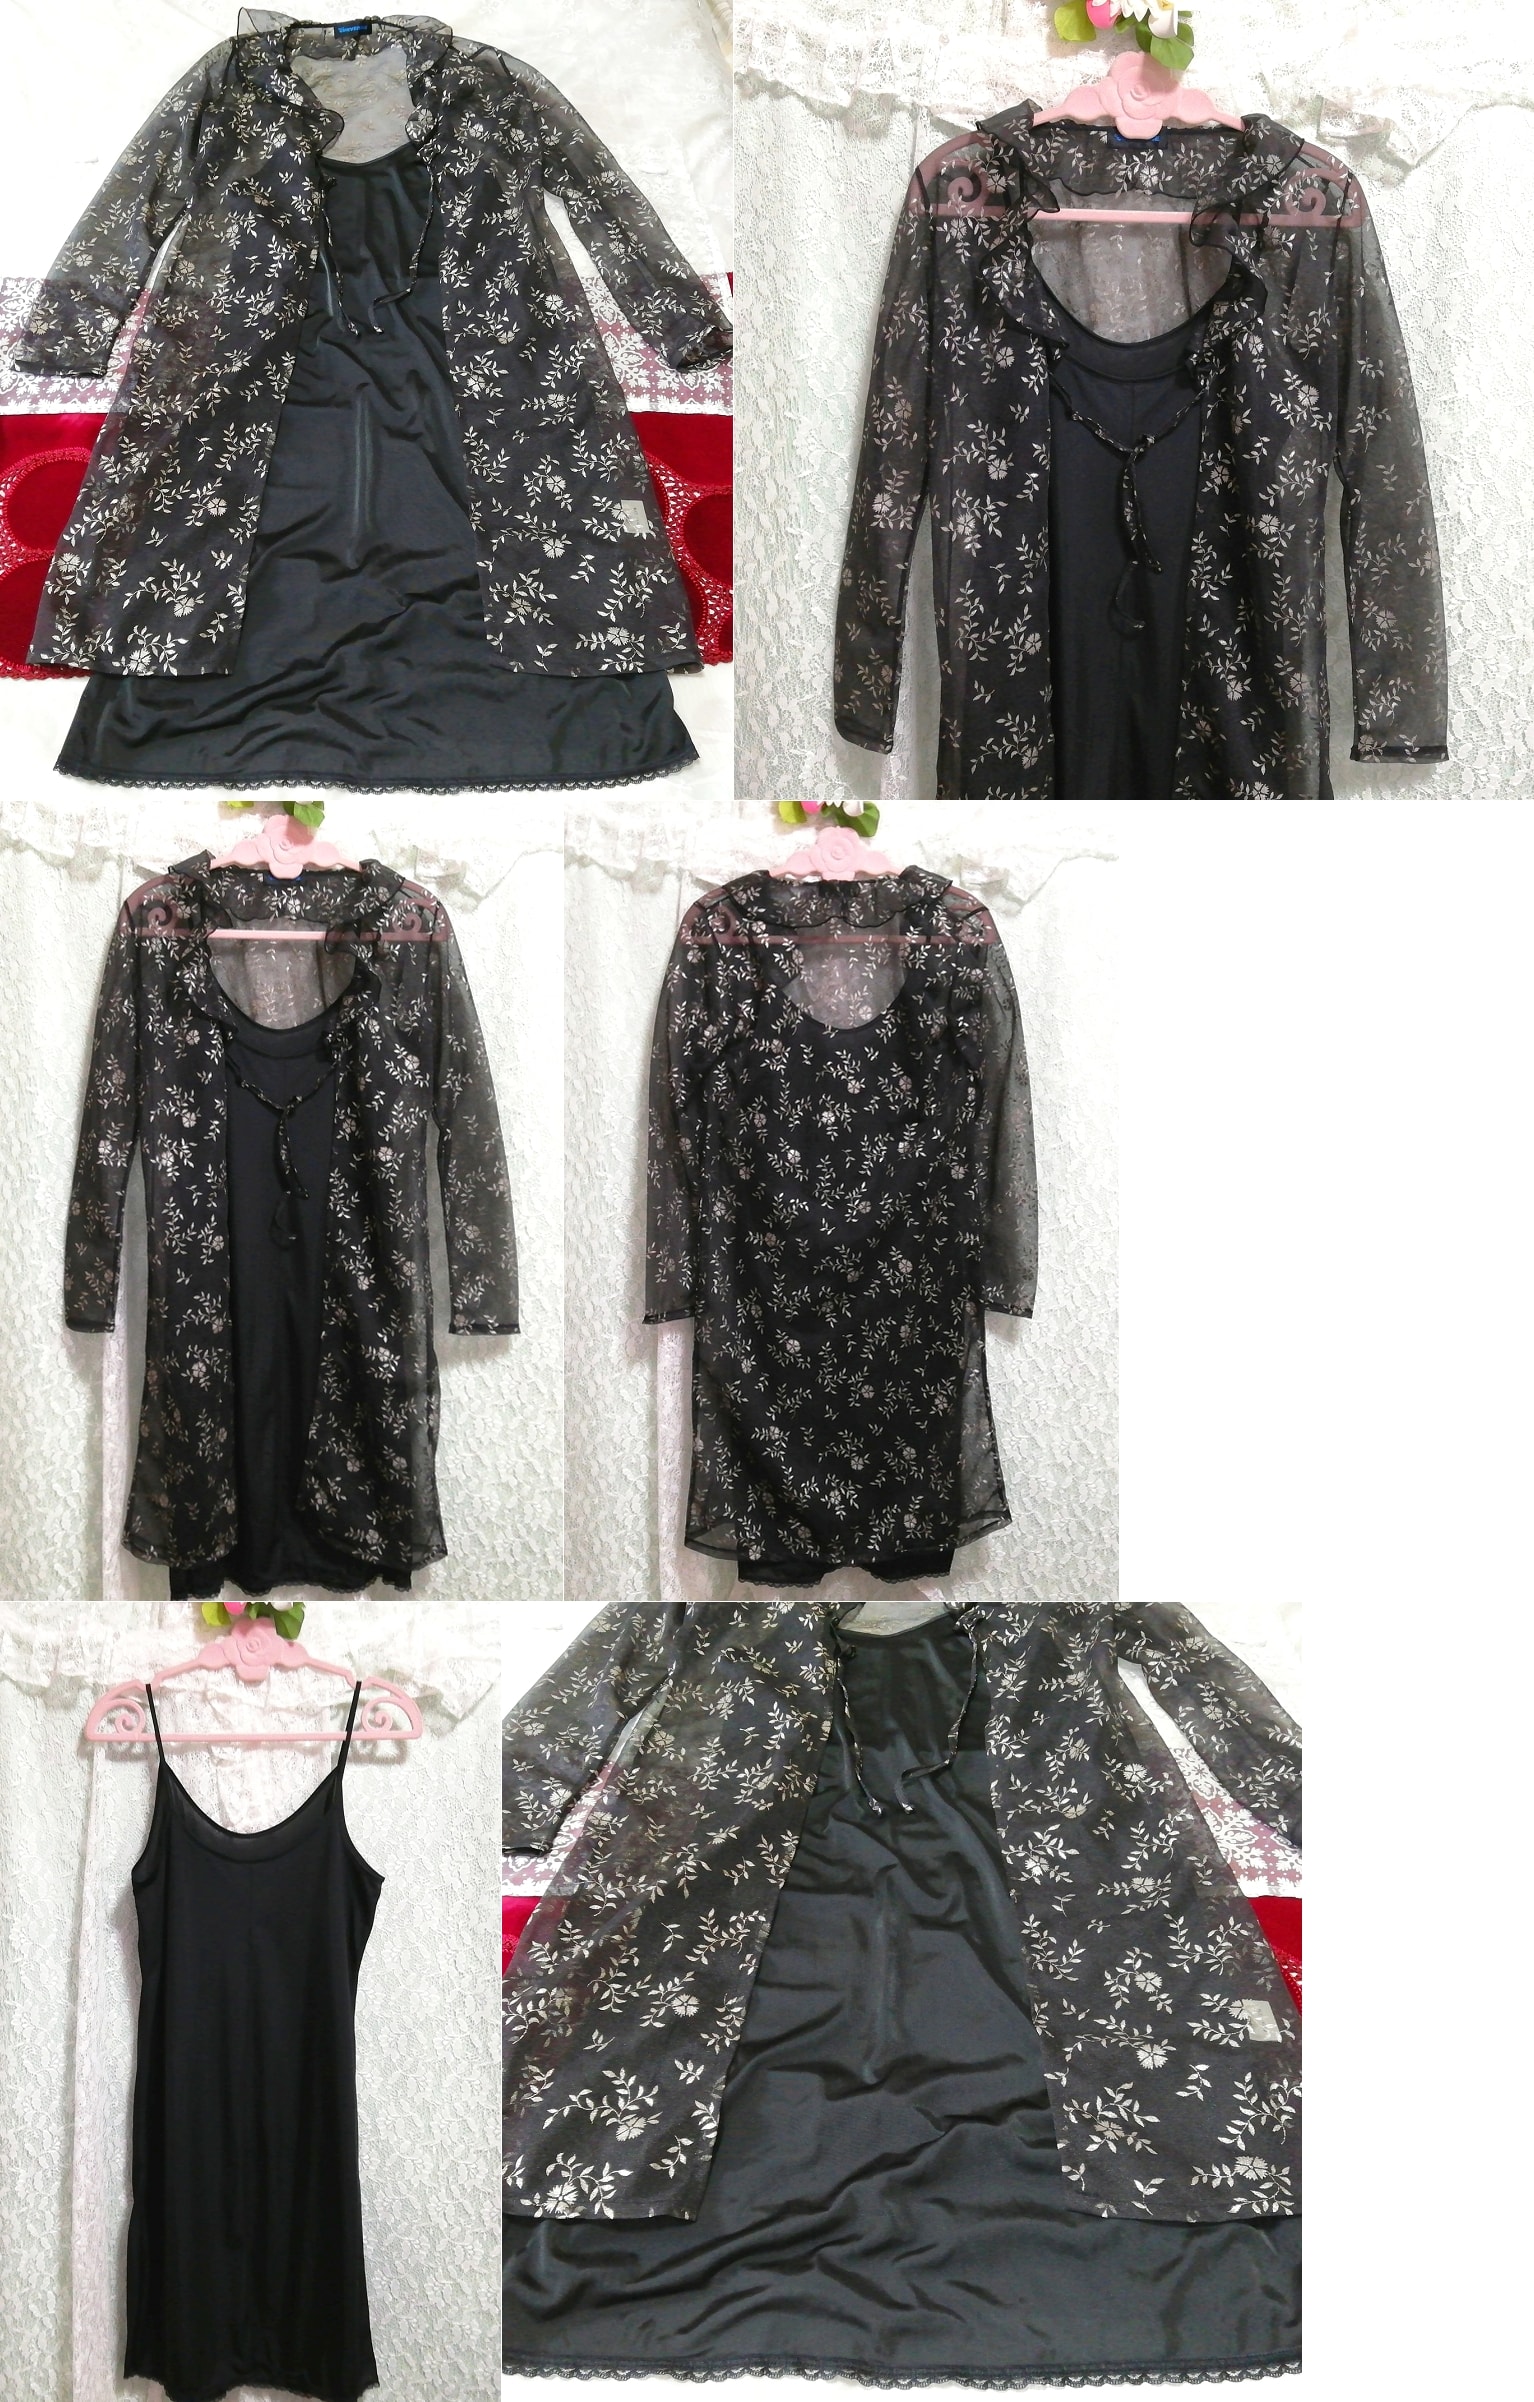 Black see-through haori gown negligee nightgown nightwear camisole babydoll dress 2P, fashion, ladies' fashion, nightwear, pajamas